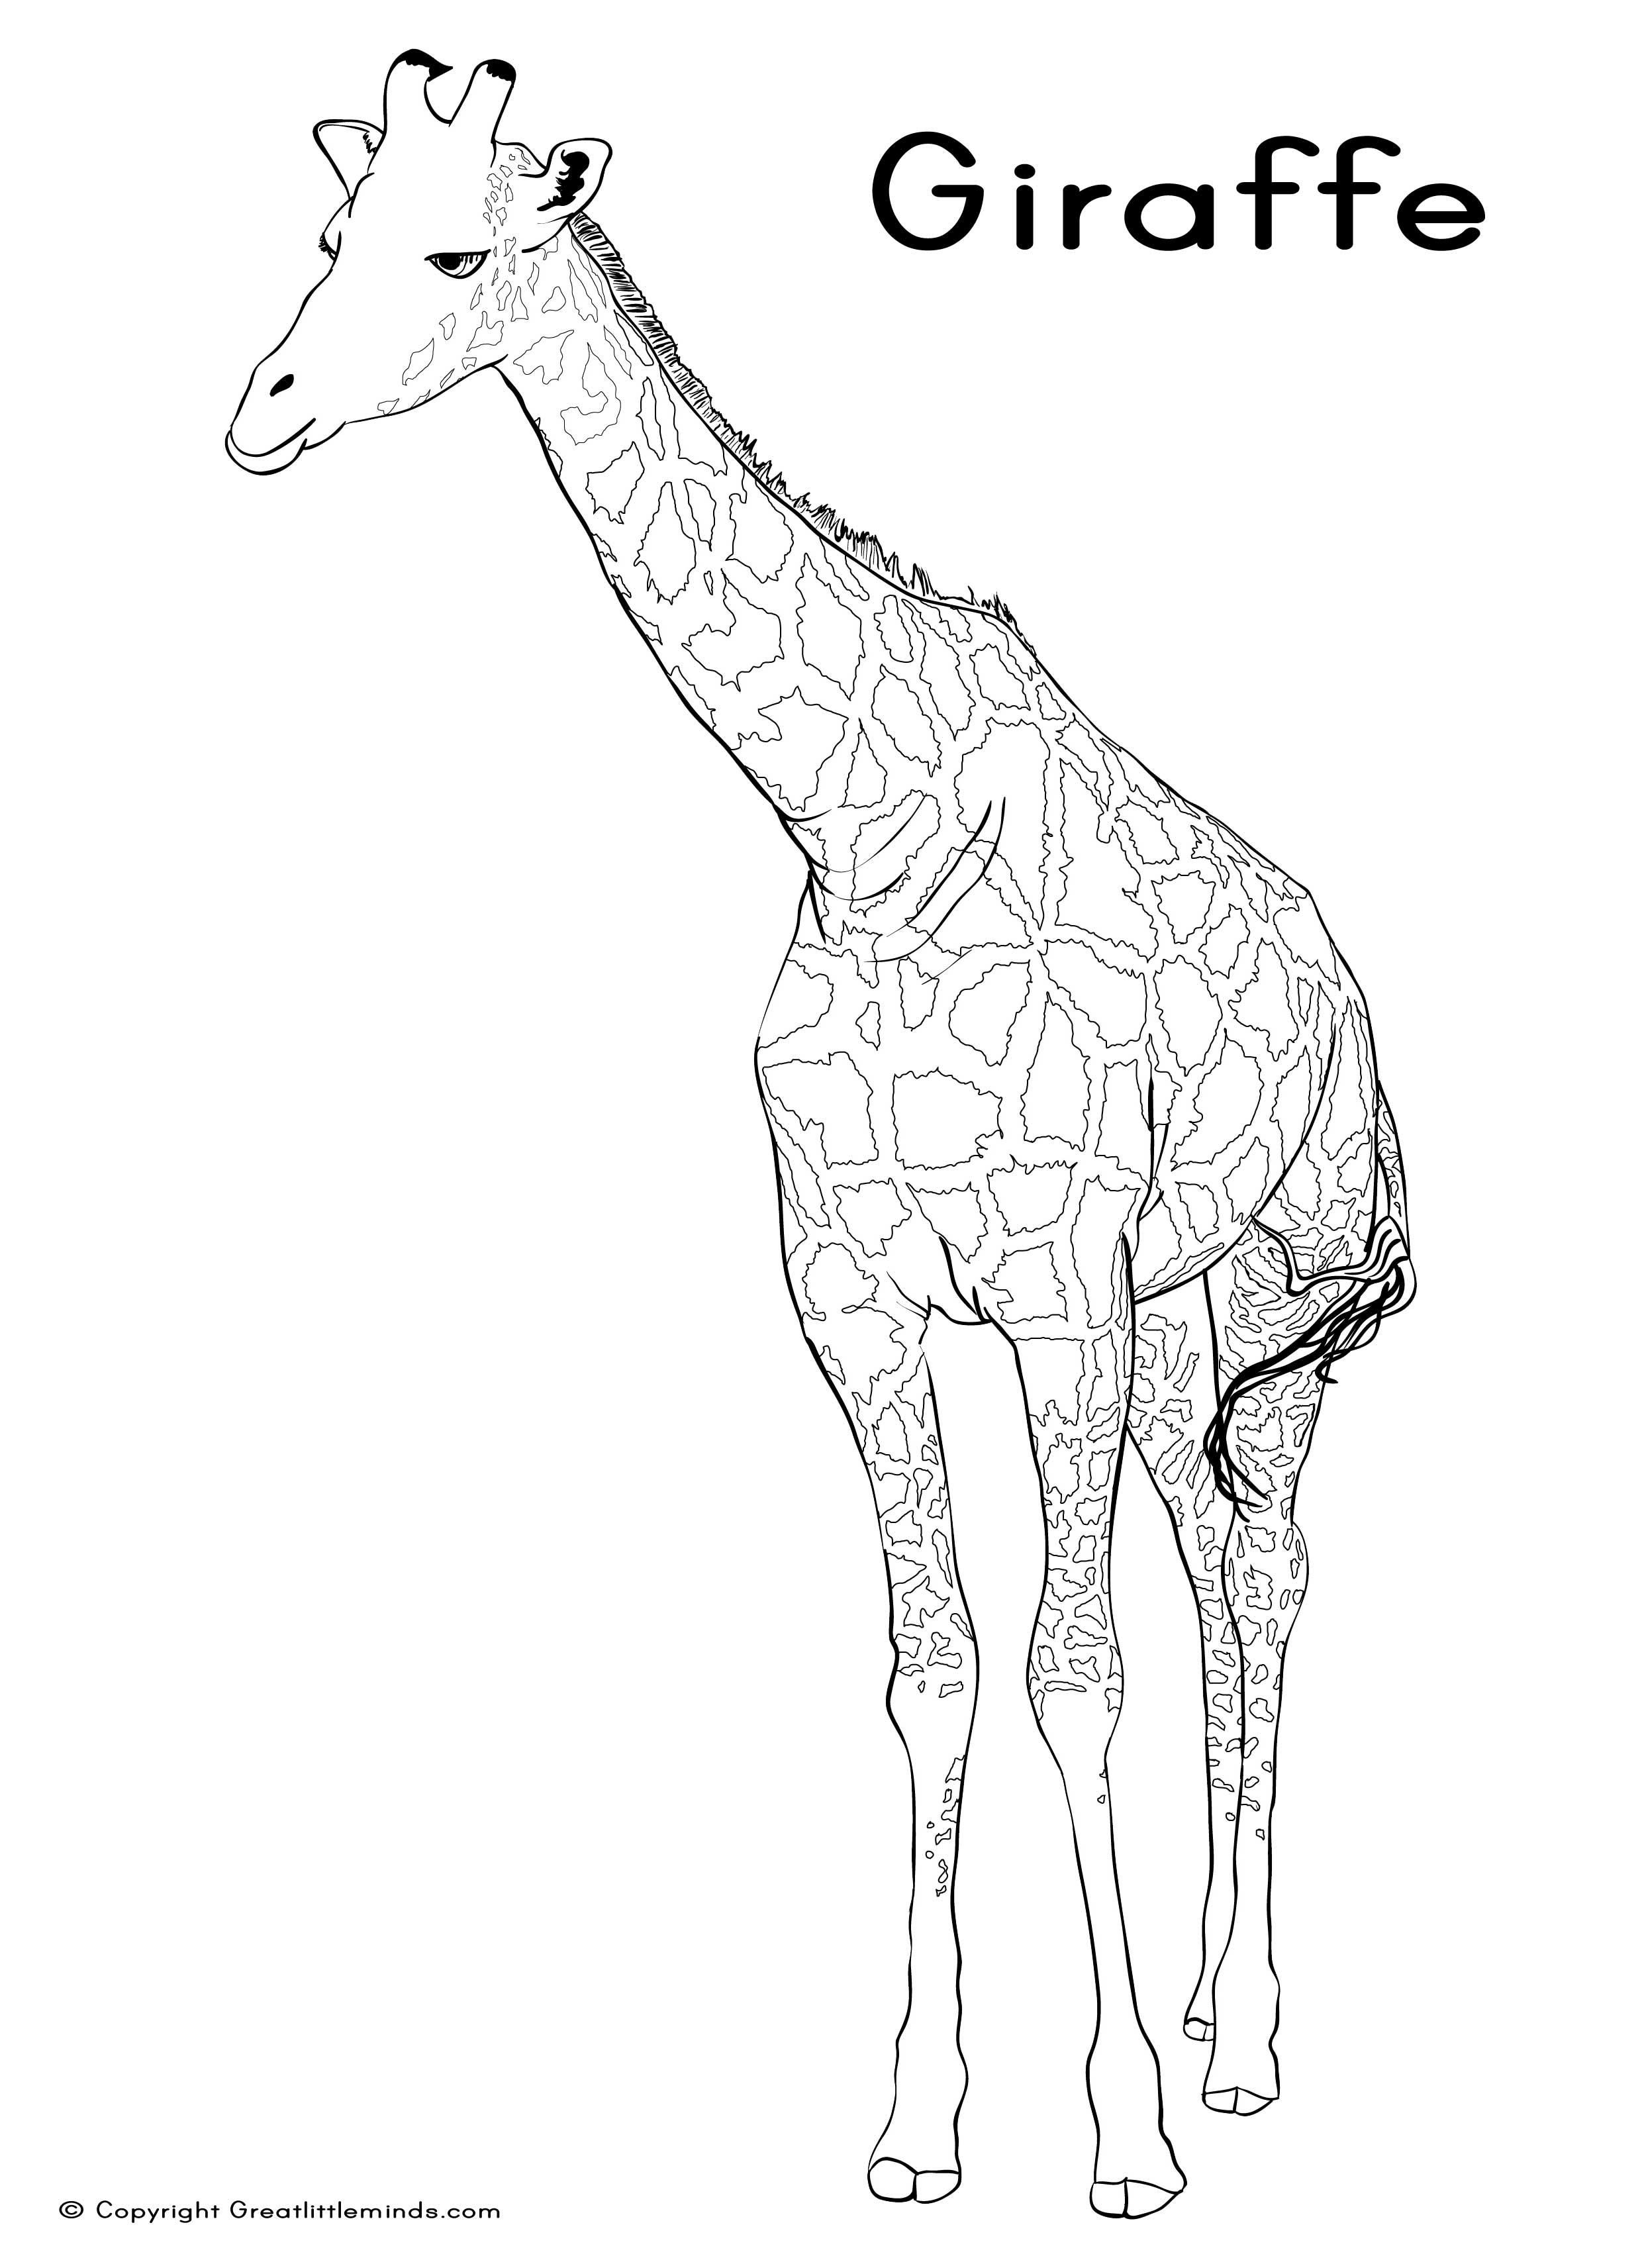 free-giraffe-line-drawing-download-free-giraffe-line-drawing-png